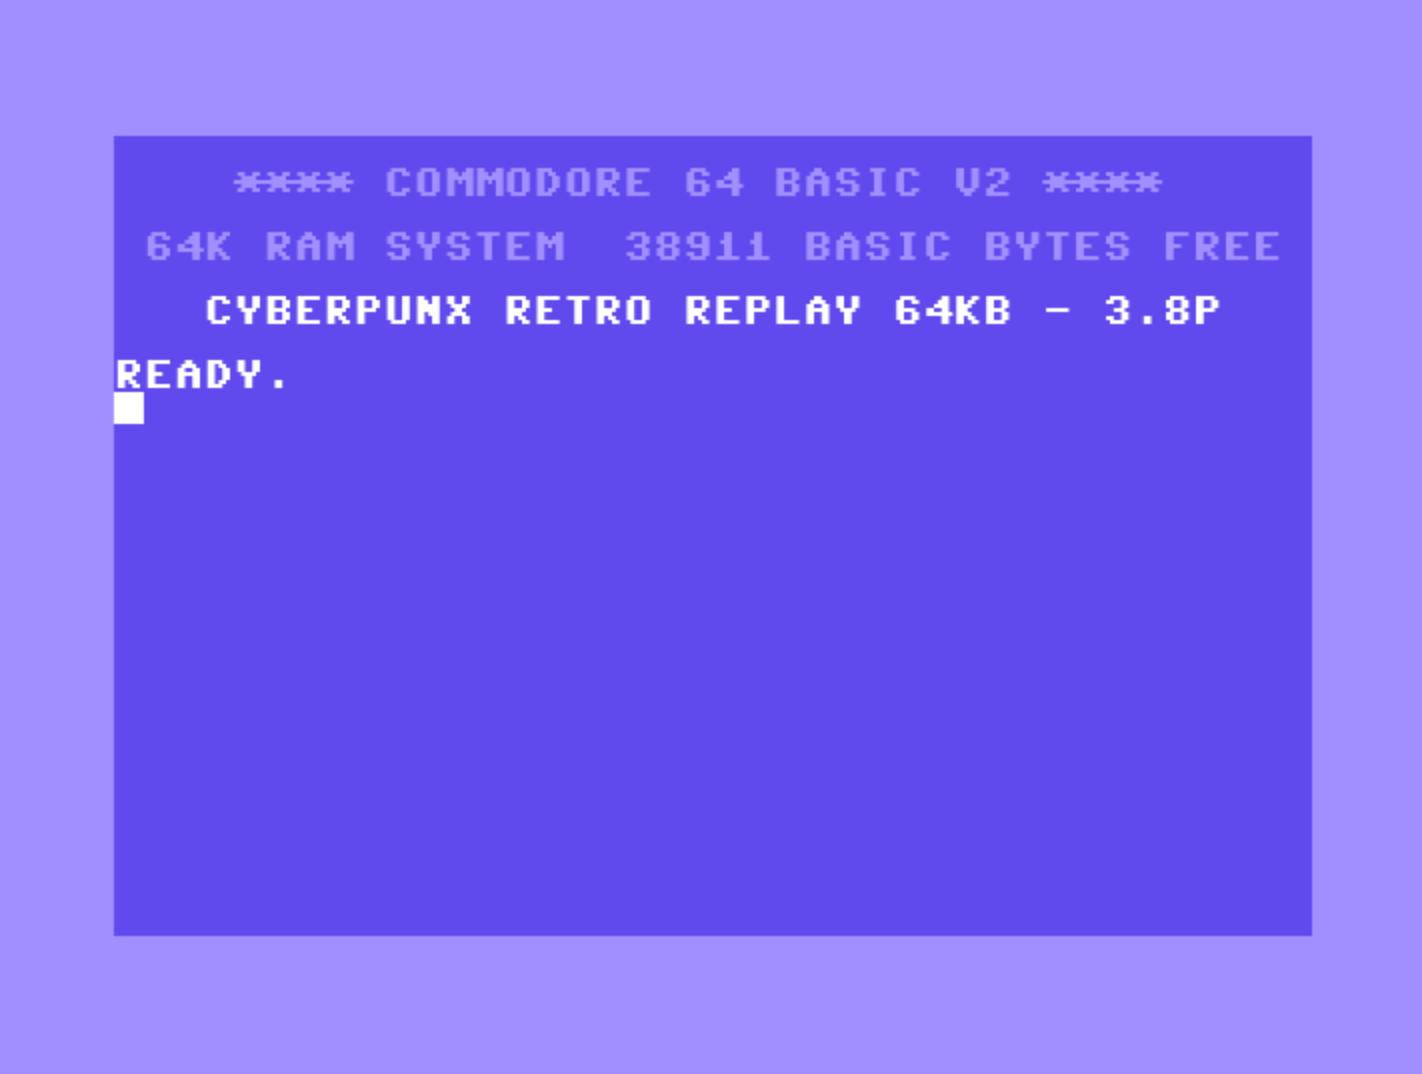 CyberpunX Retro Replay ROM V3.8p + Turbo Macro Pro 1.2 (standard version + REU) - Patched Version